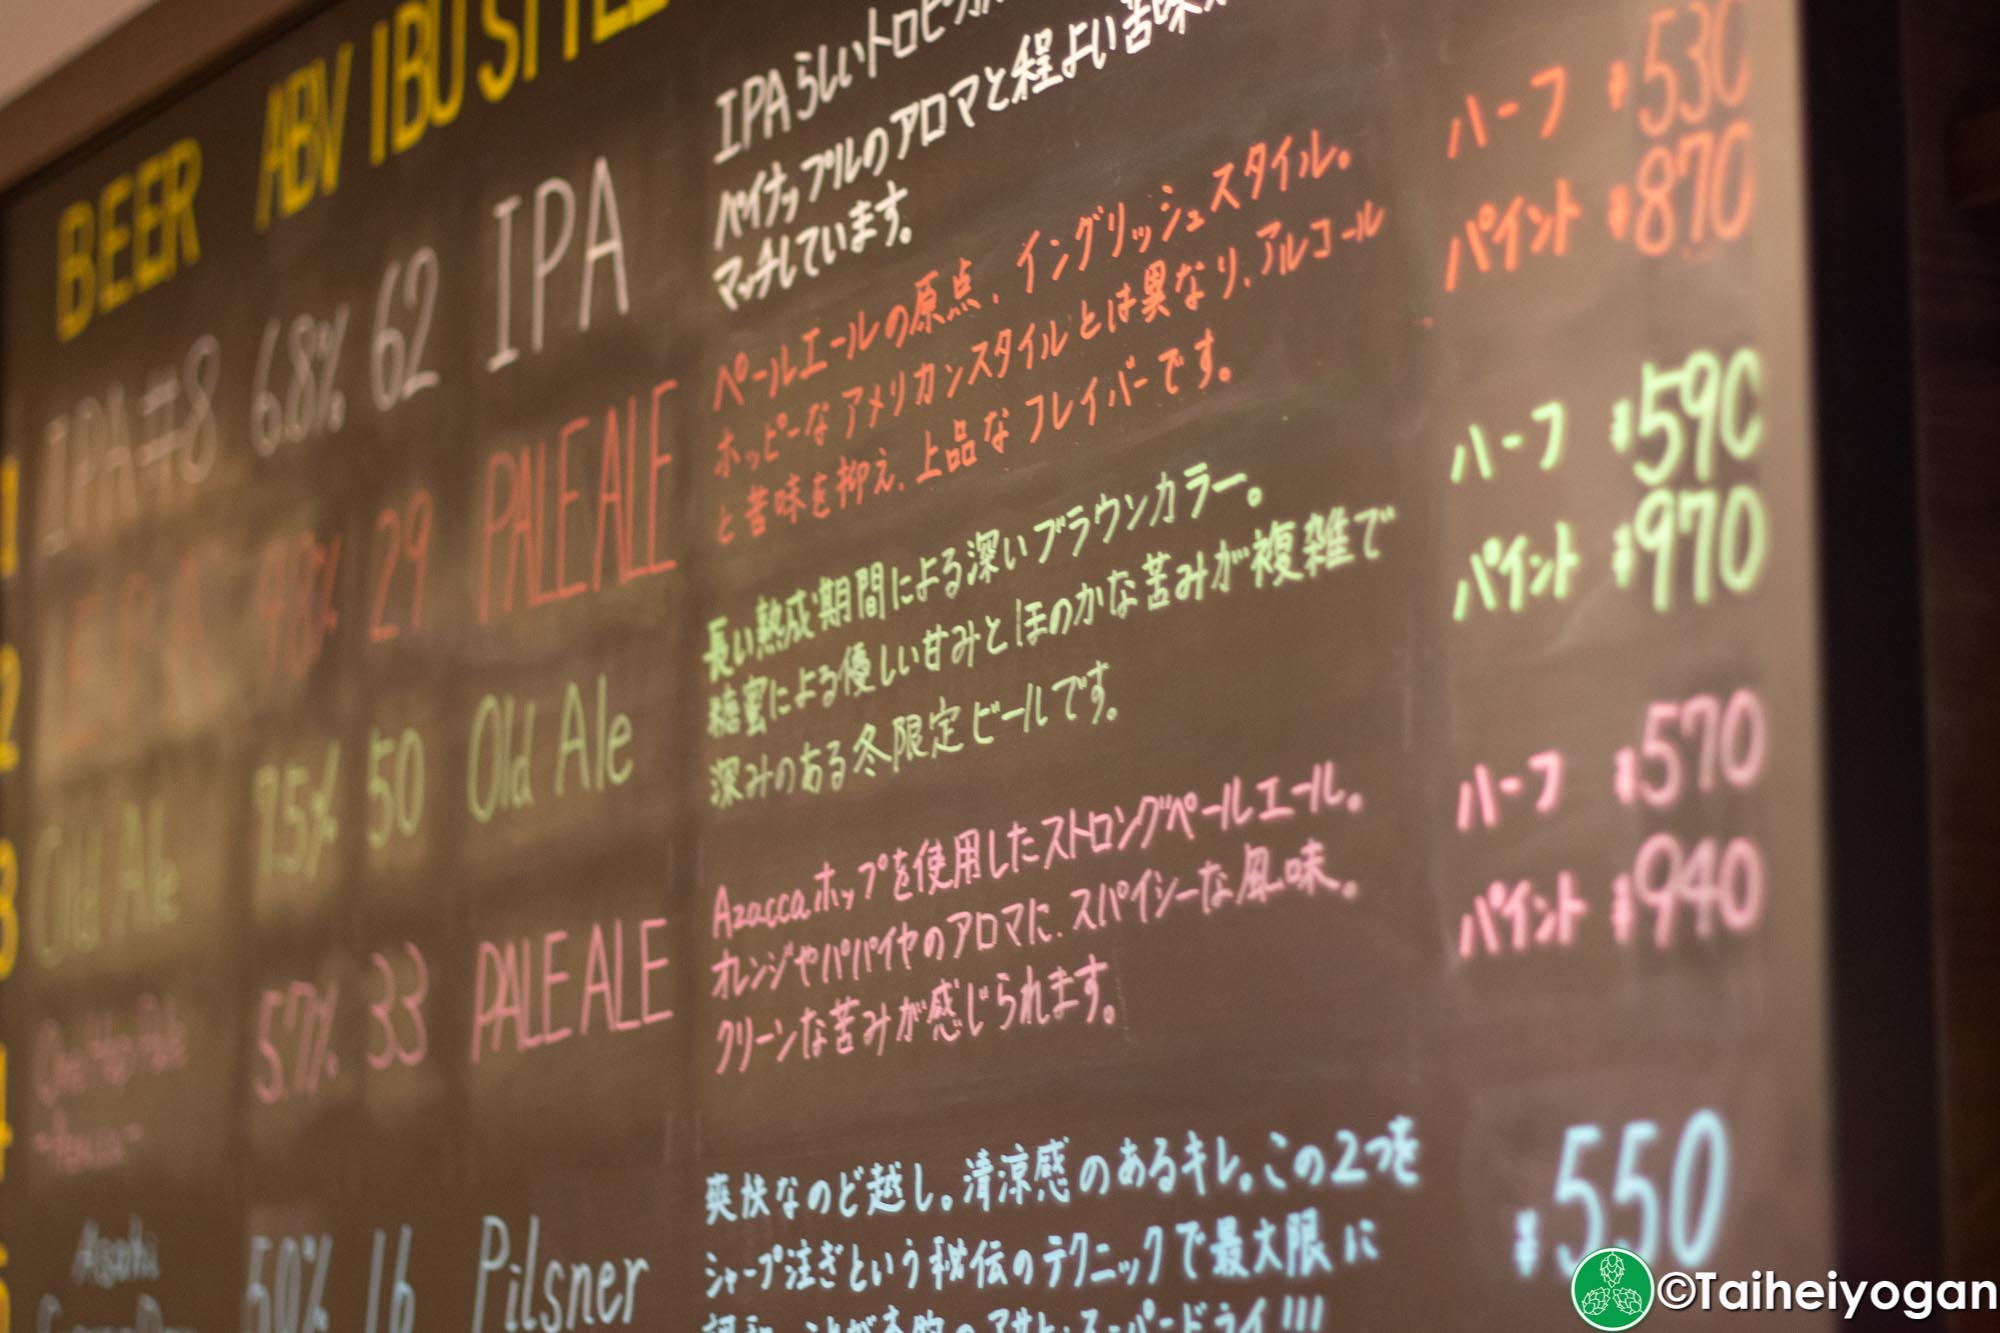 TDM 1874 Aoyama - Interior - 1F - Craft Beer Menu